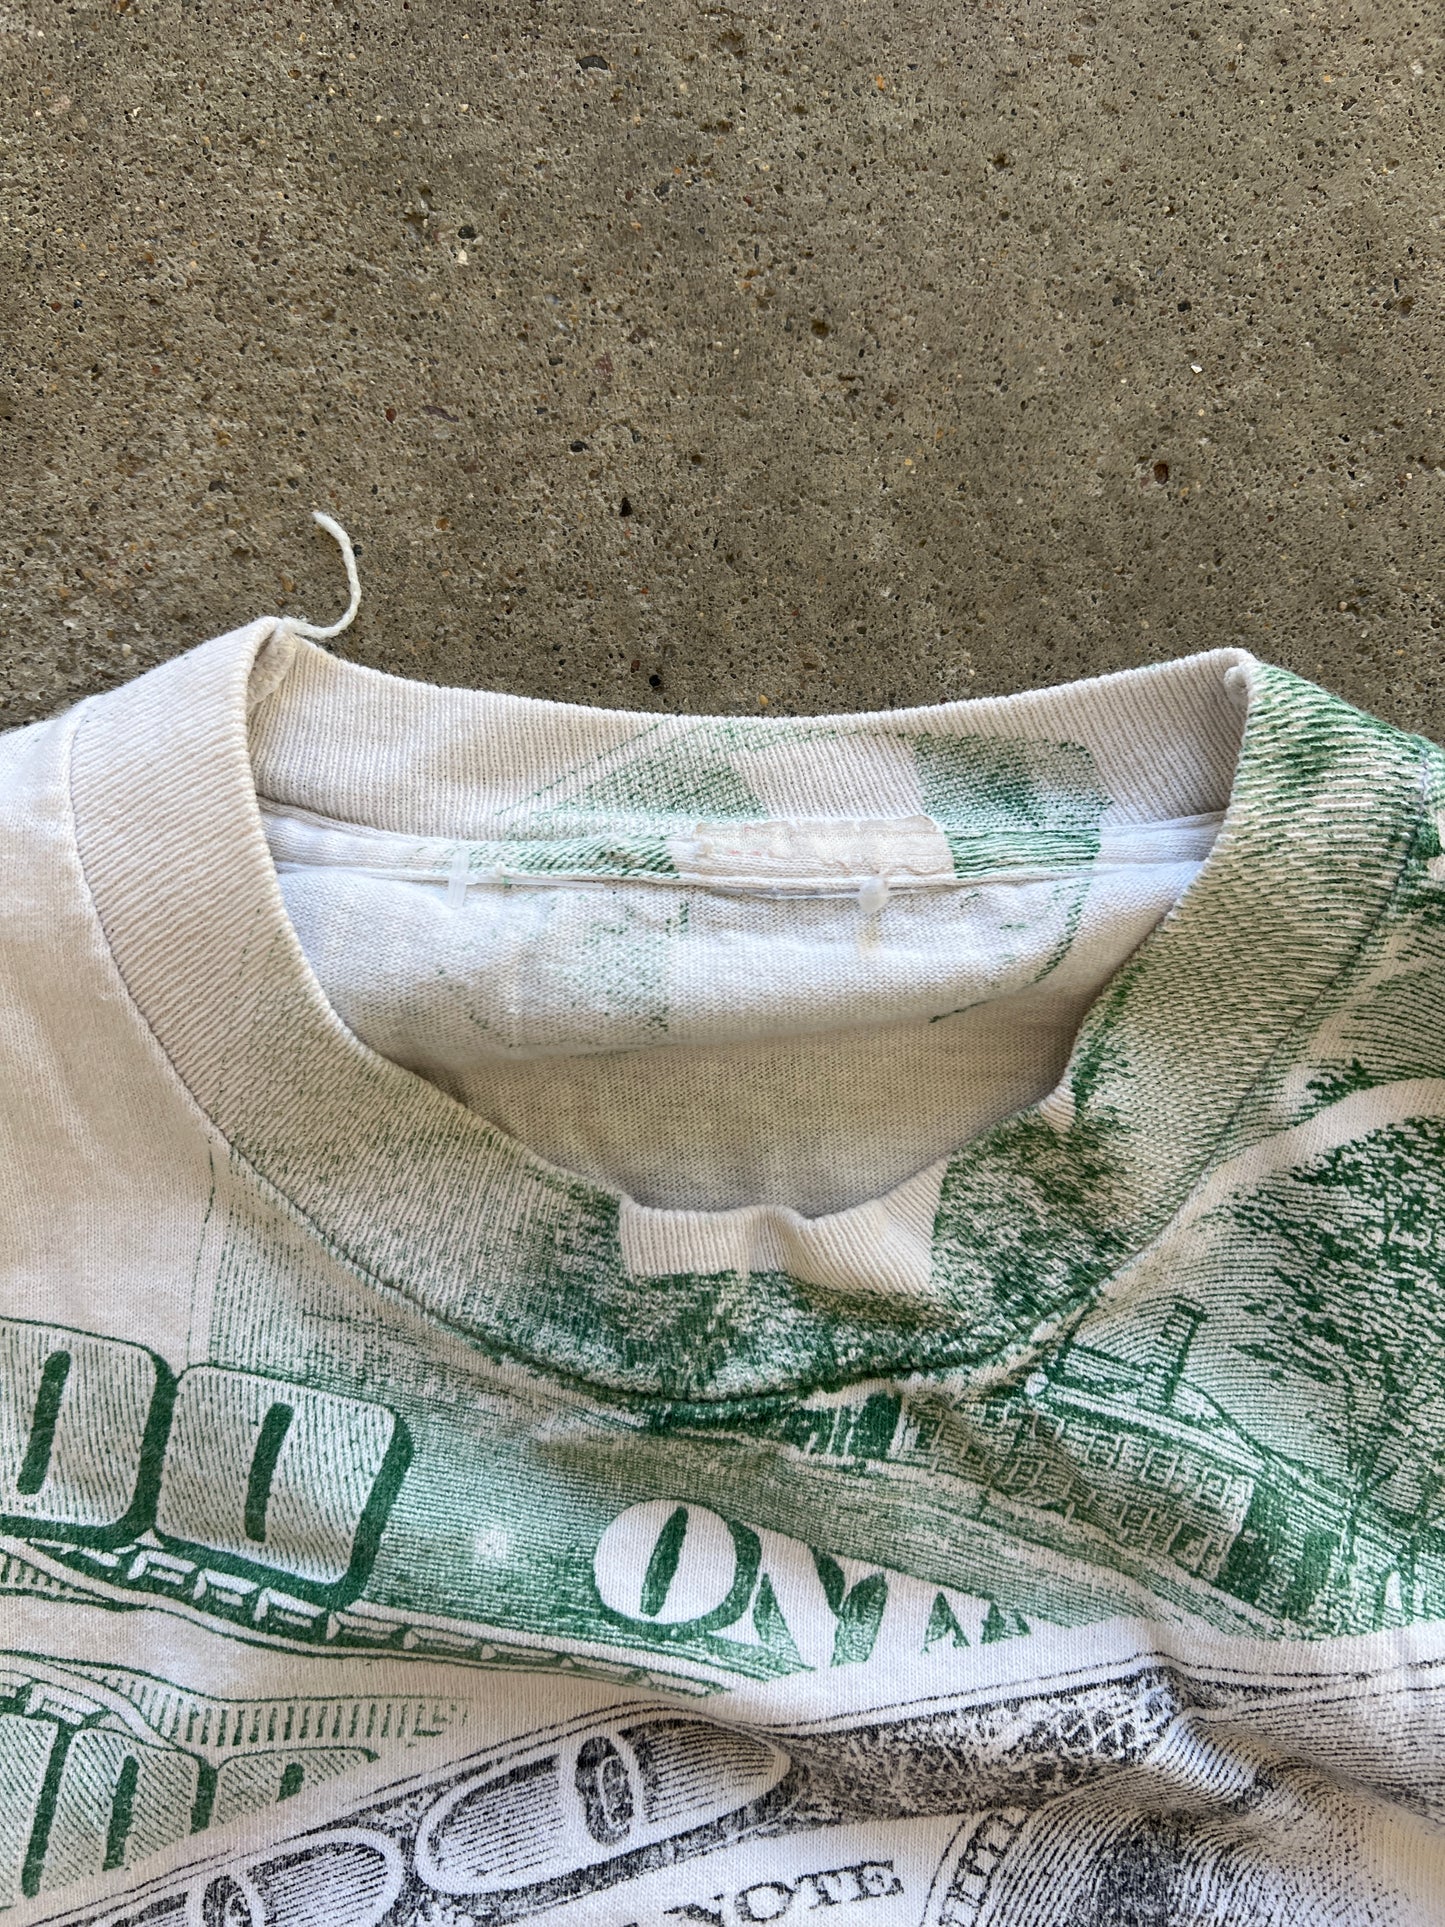 Vintage Money All Over Print Shirt - M